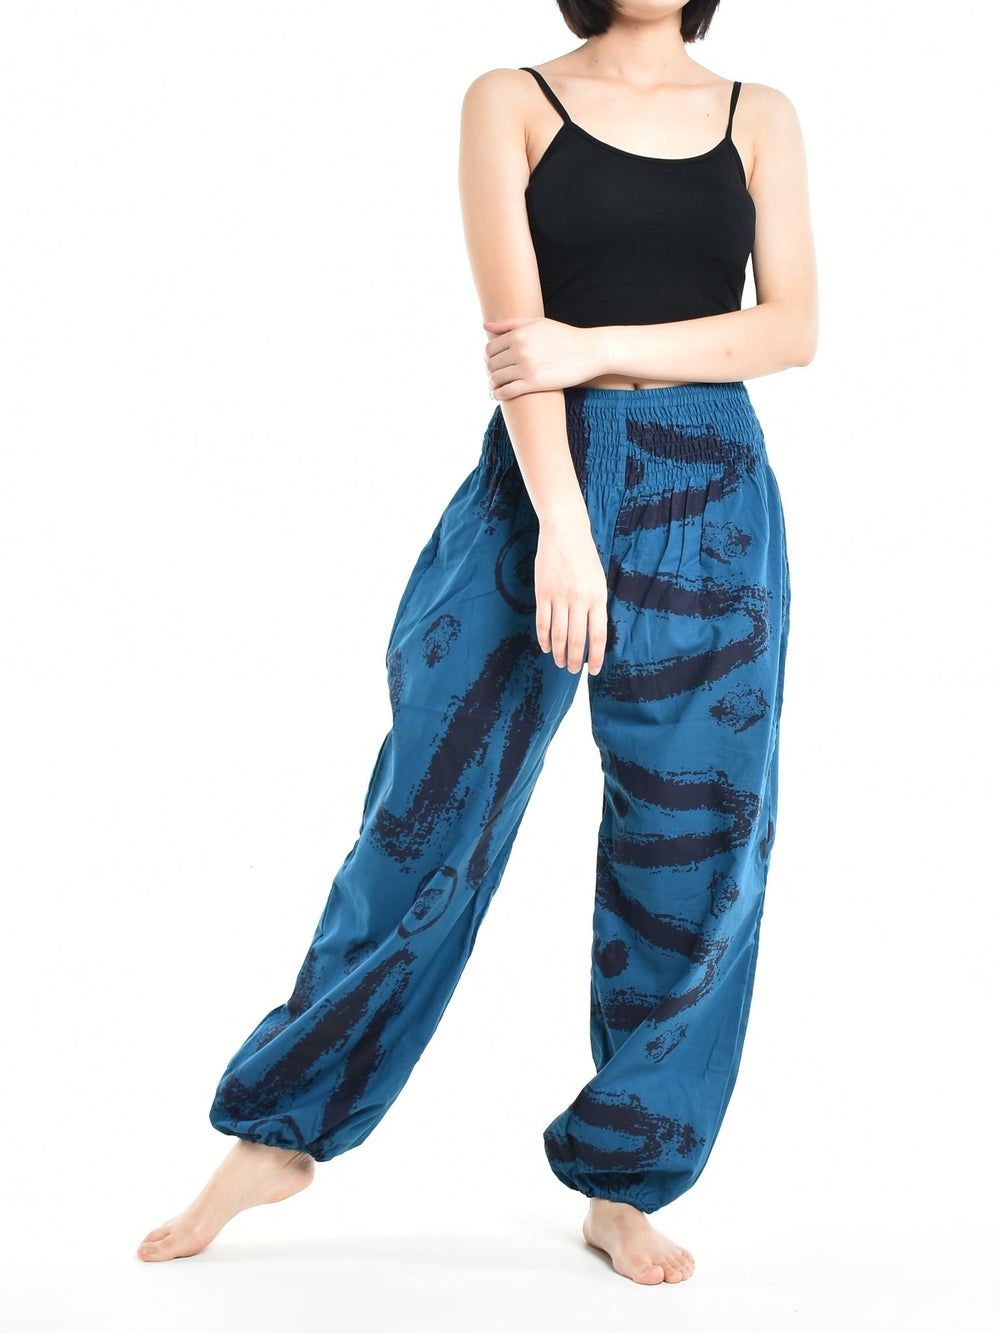 Bohotusk Womens Autumn Blue Swirl Cotton Harem Pants S/M to 3XL